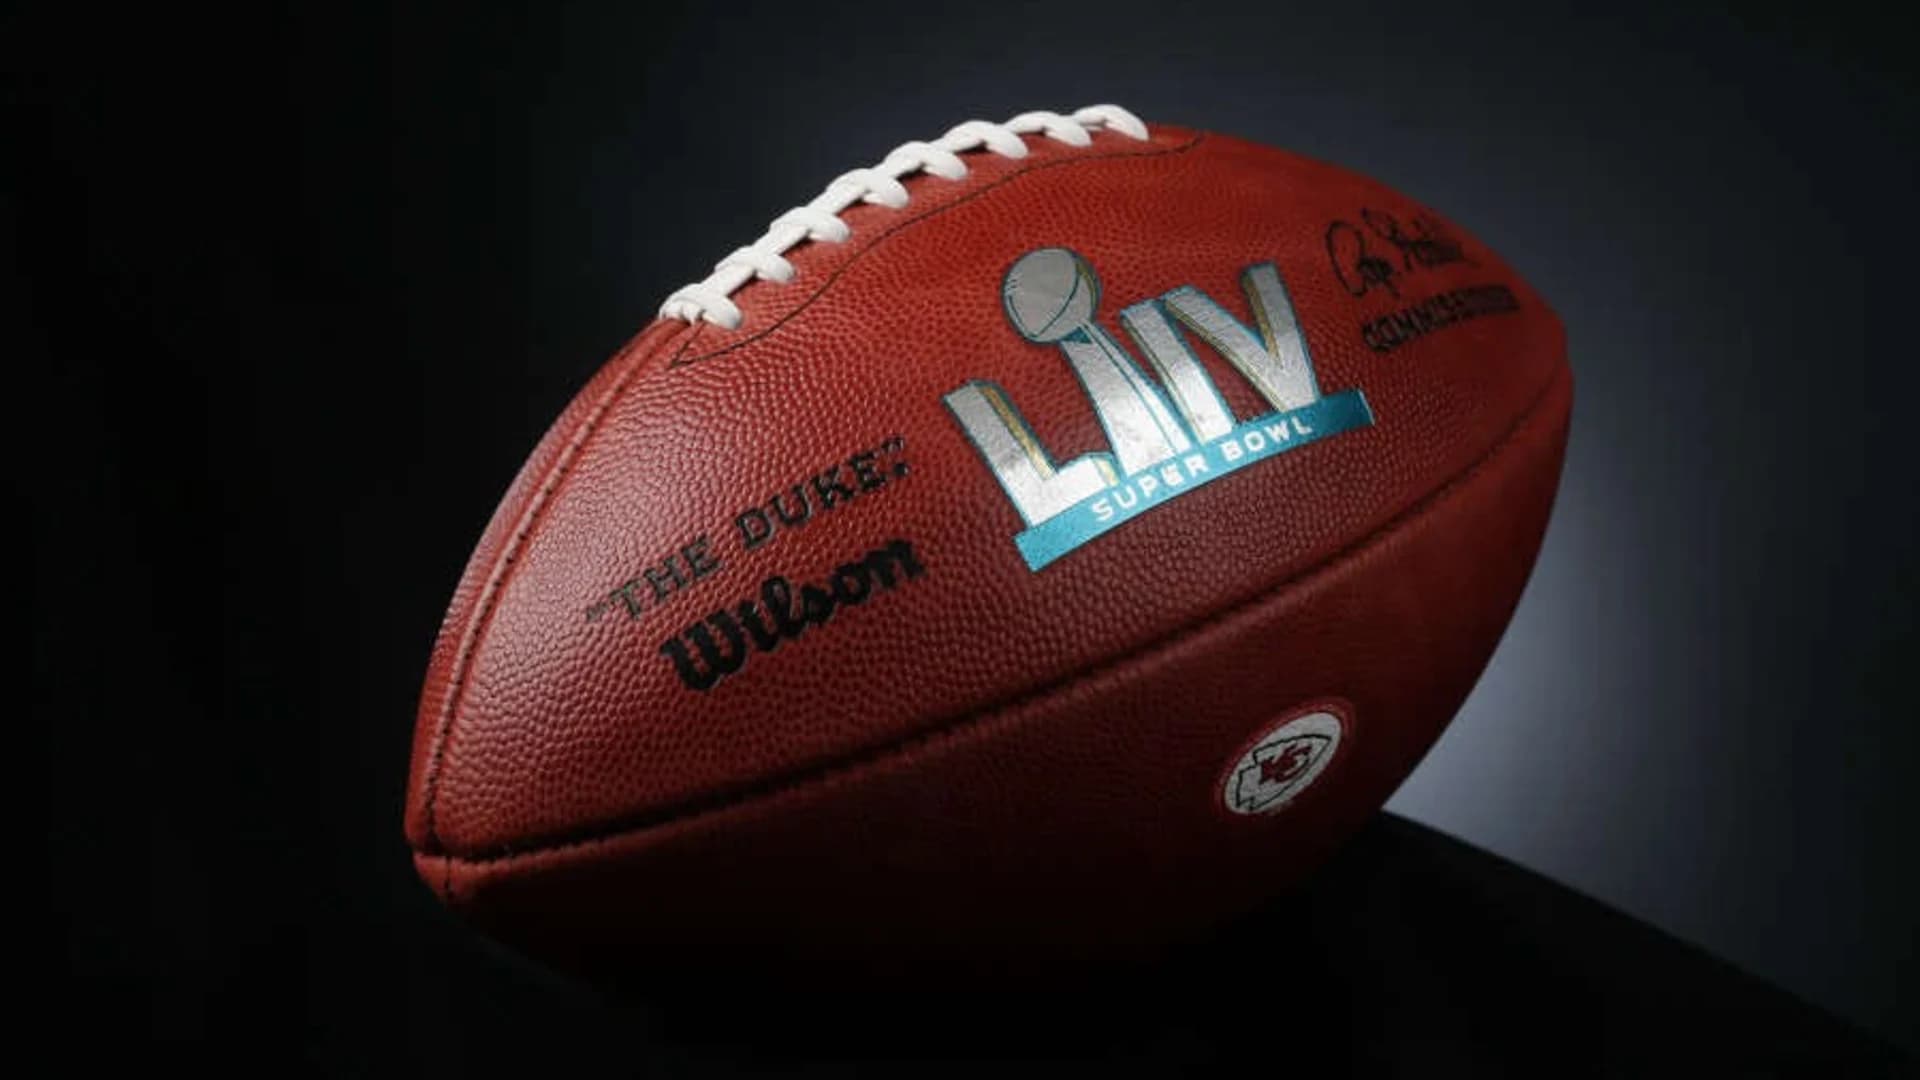 News 12 viewers pick Chiefs to win Super Bowl LIV